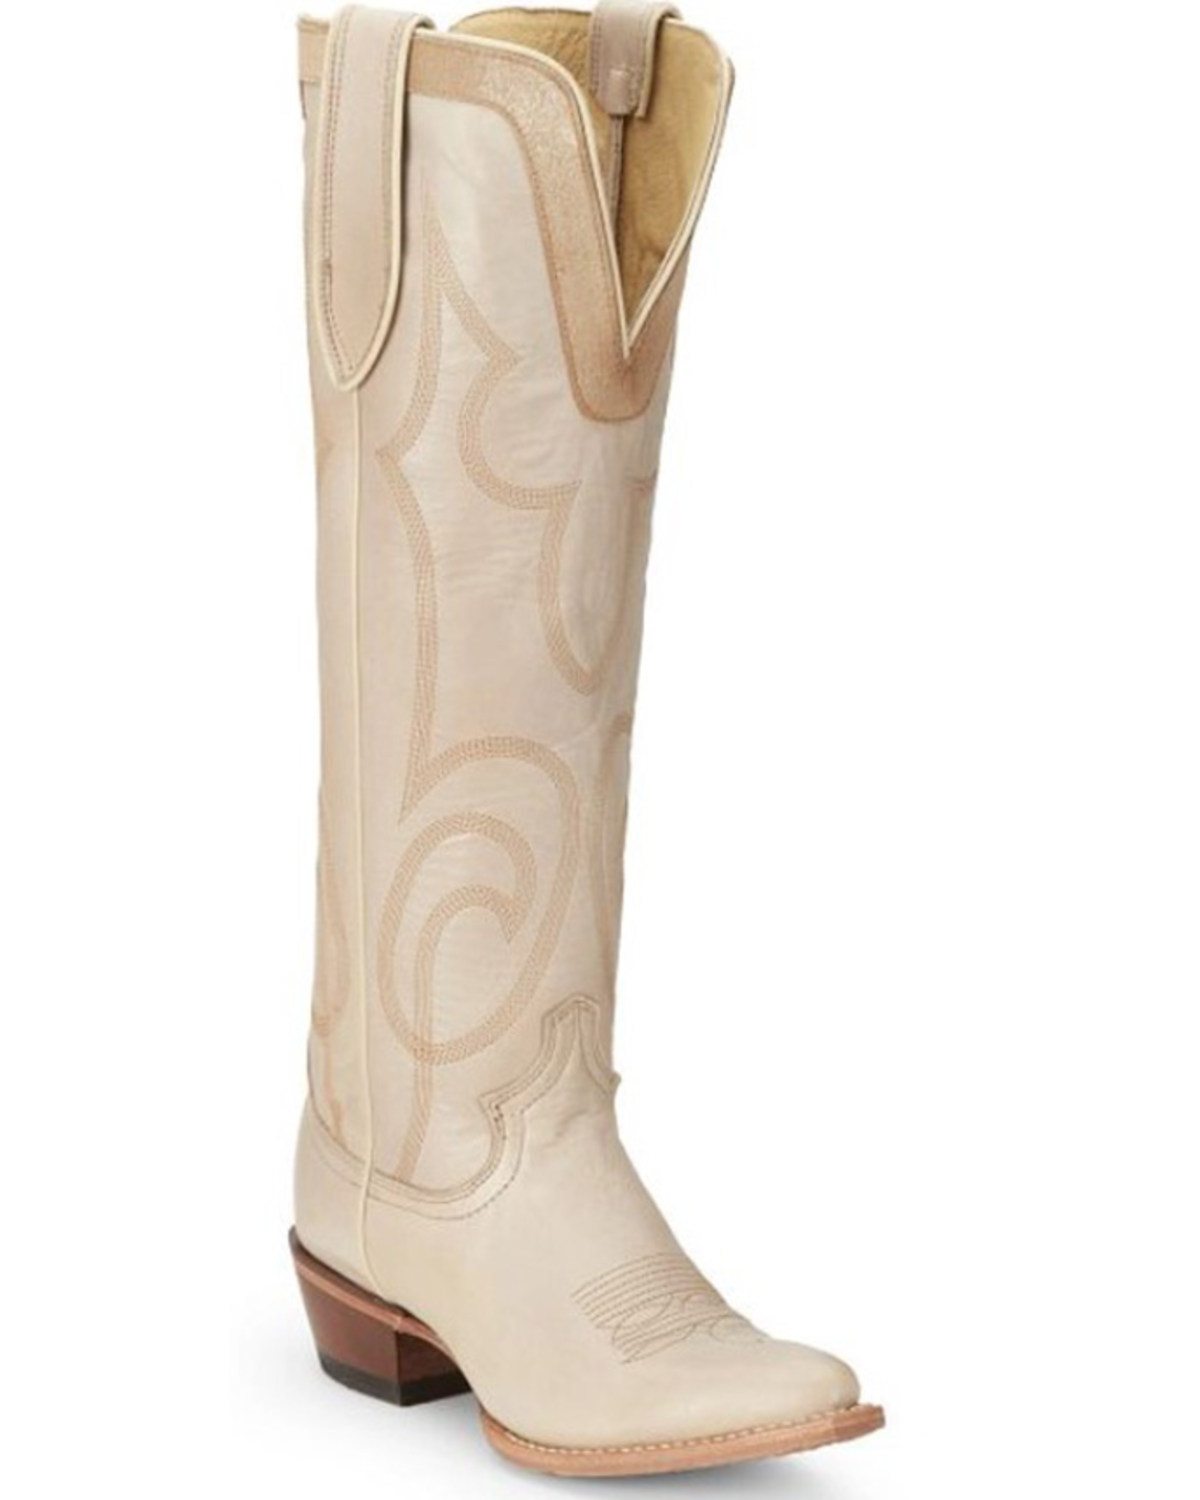 Justin Women's Verlie Vintage Tall Western Boots - Snip Toe